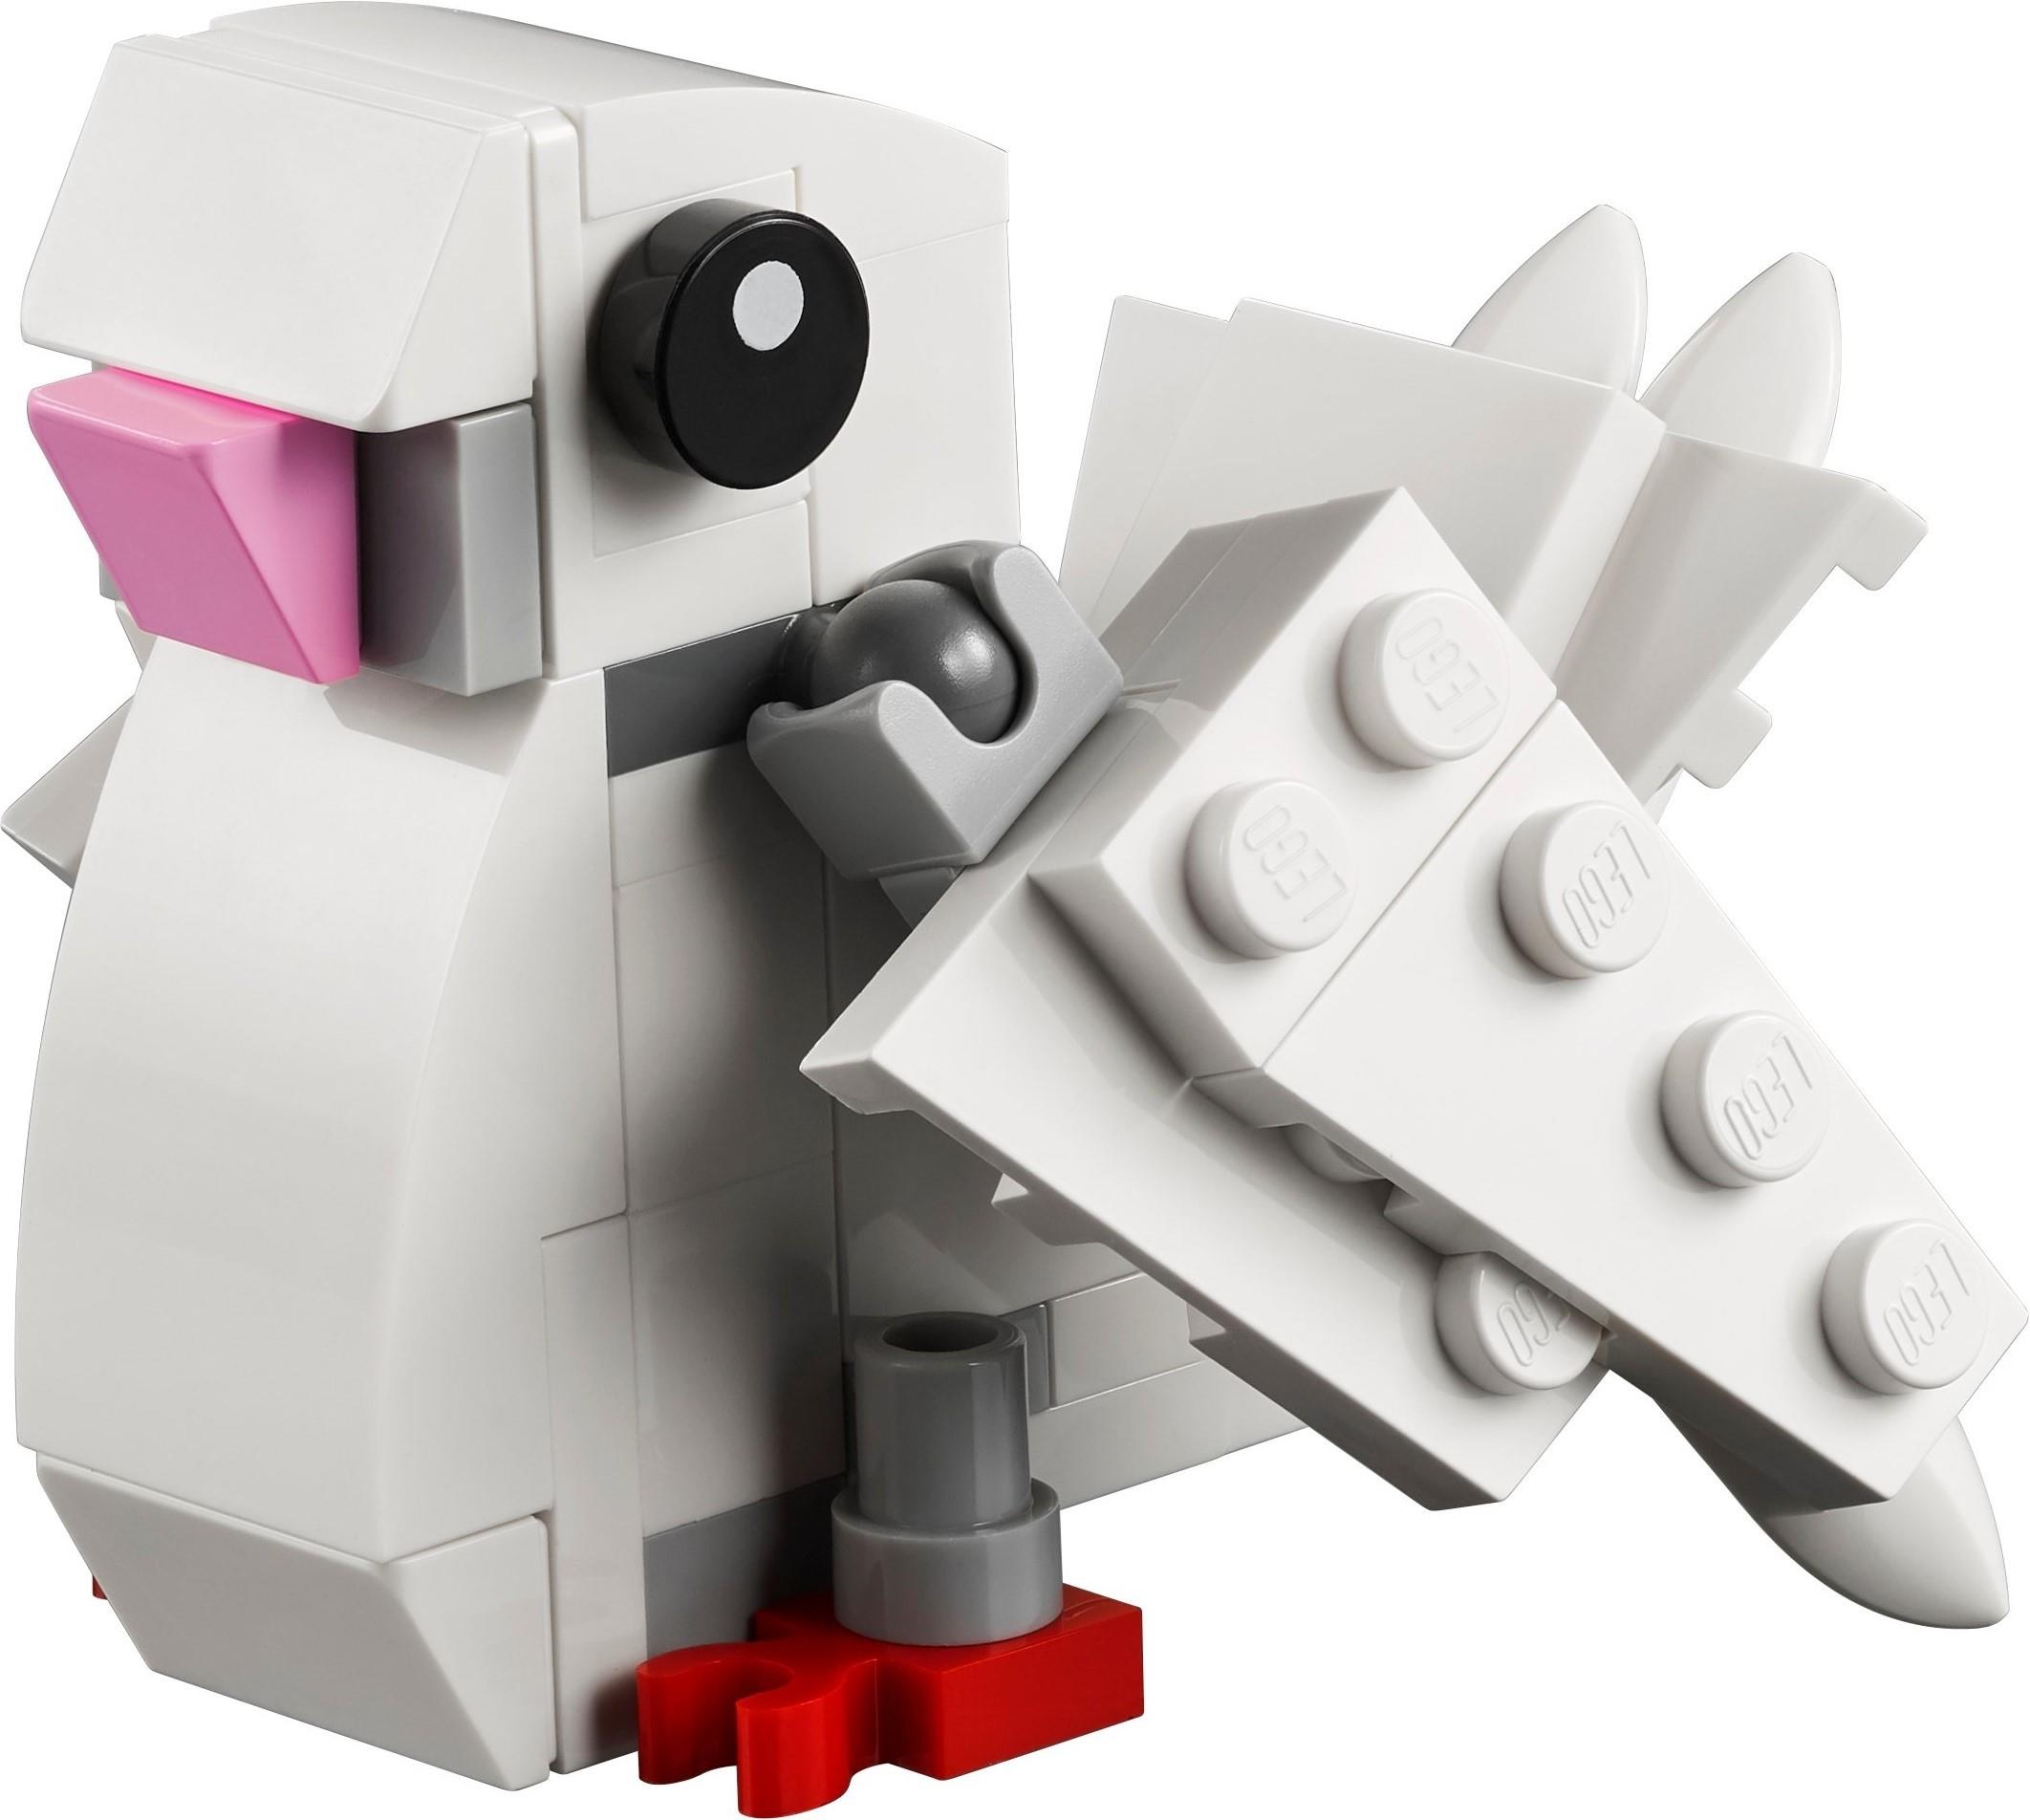 LEGO Valentine Panda Set 40396